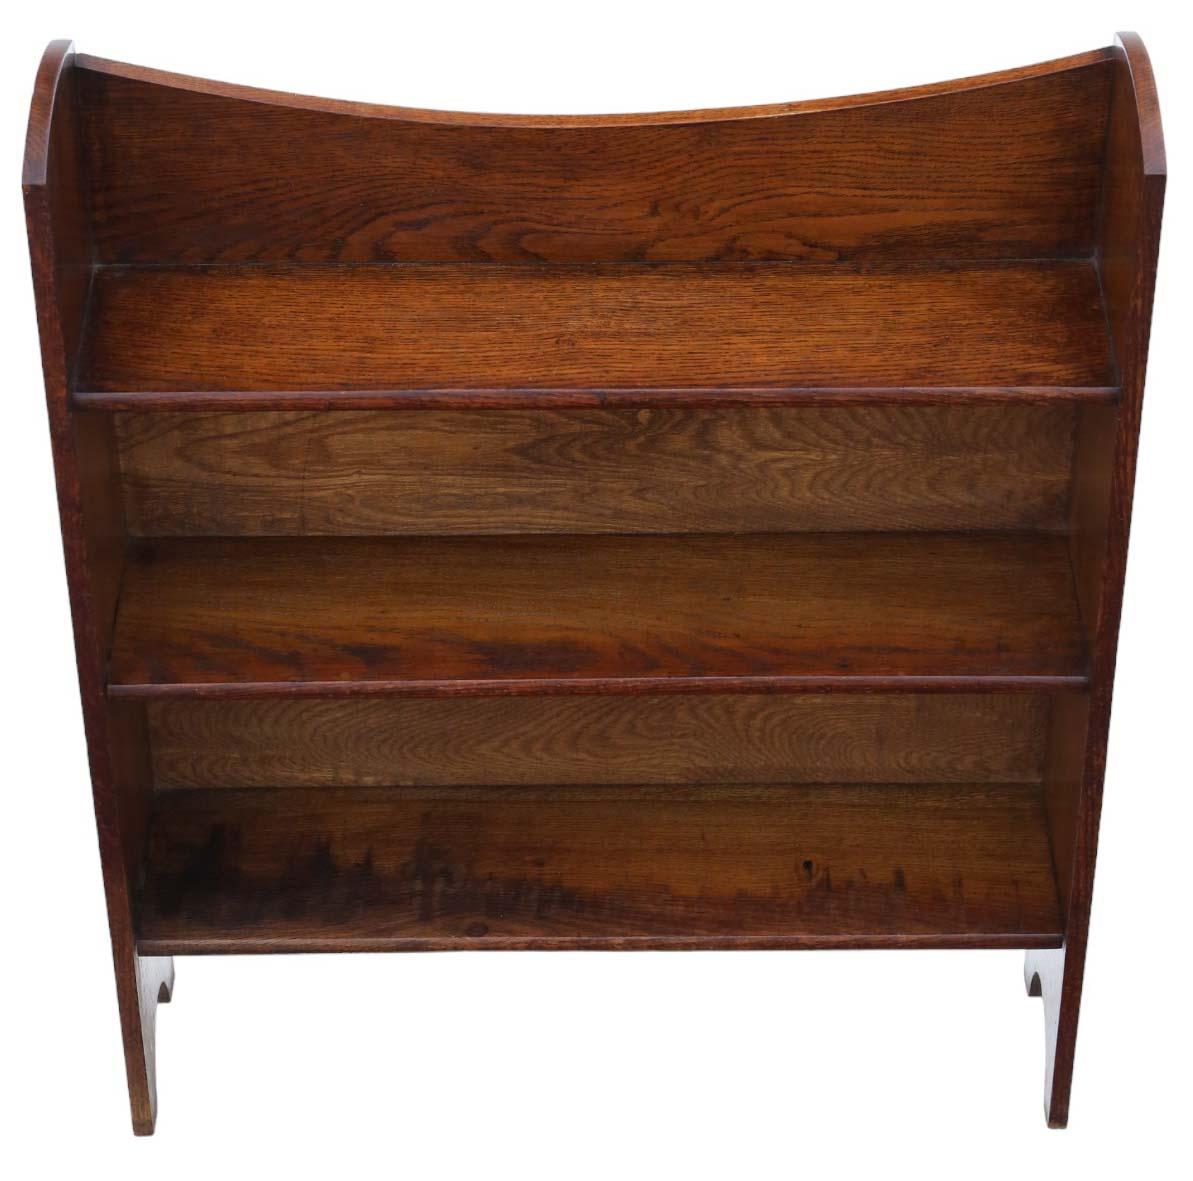 Early 20th Century Art Nouveau Antique Oak Bookcase Display Cabinet - Quality C1910 Piece For Sale